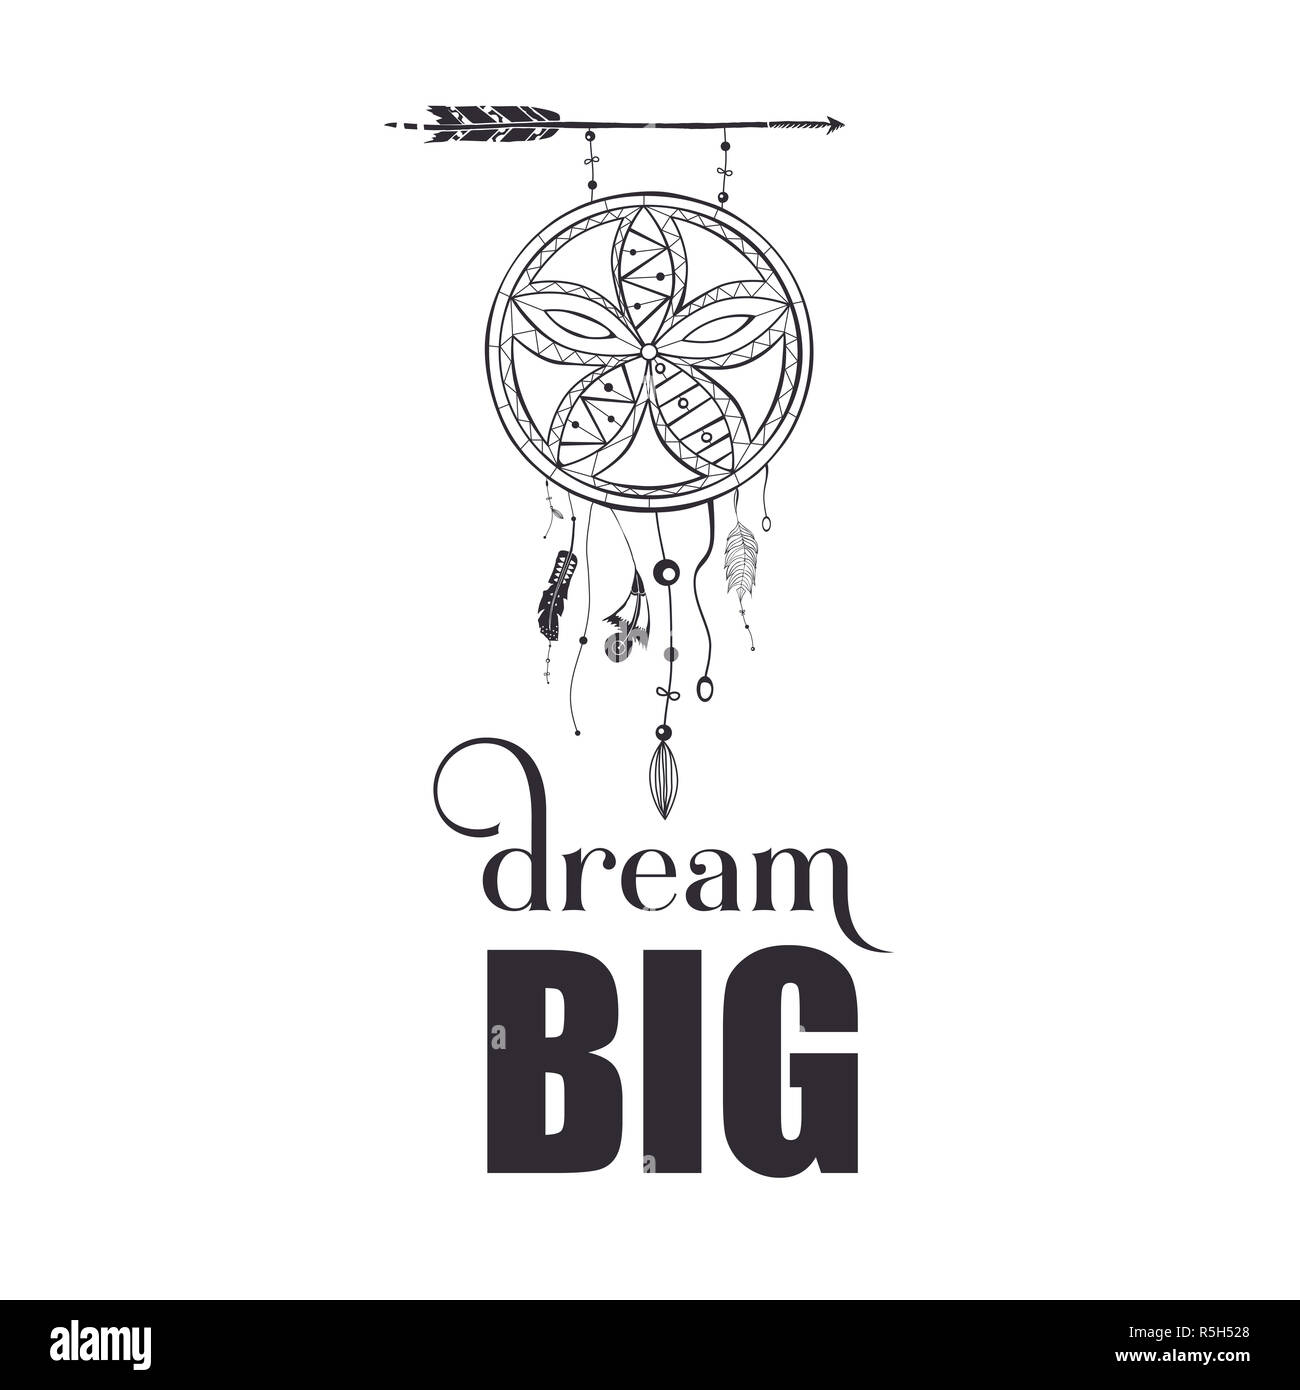 Dream big wall art poster Stock Photo